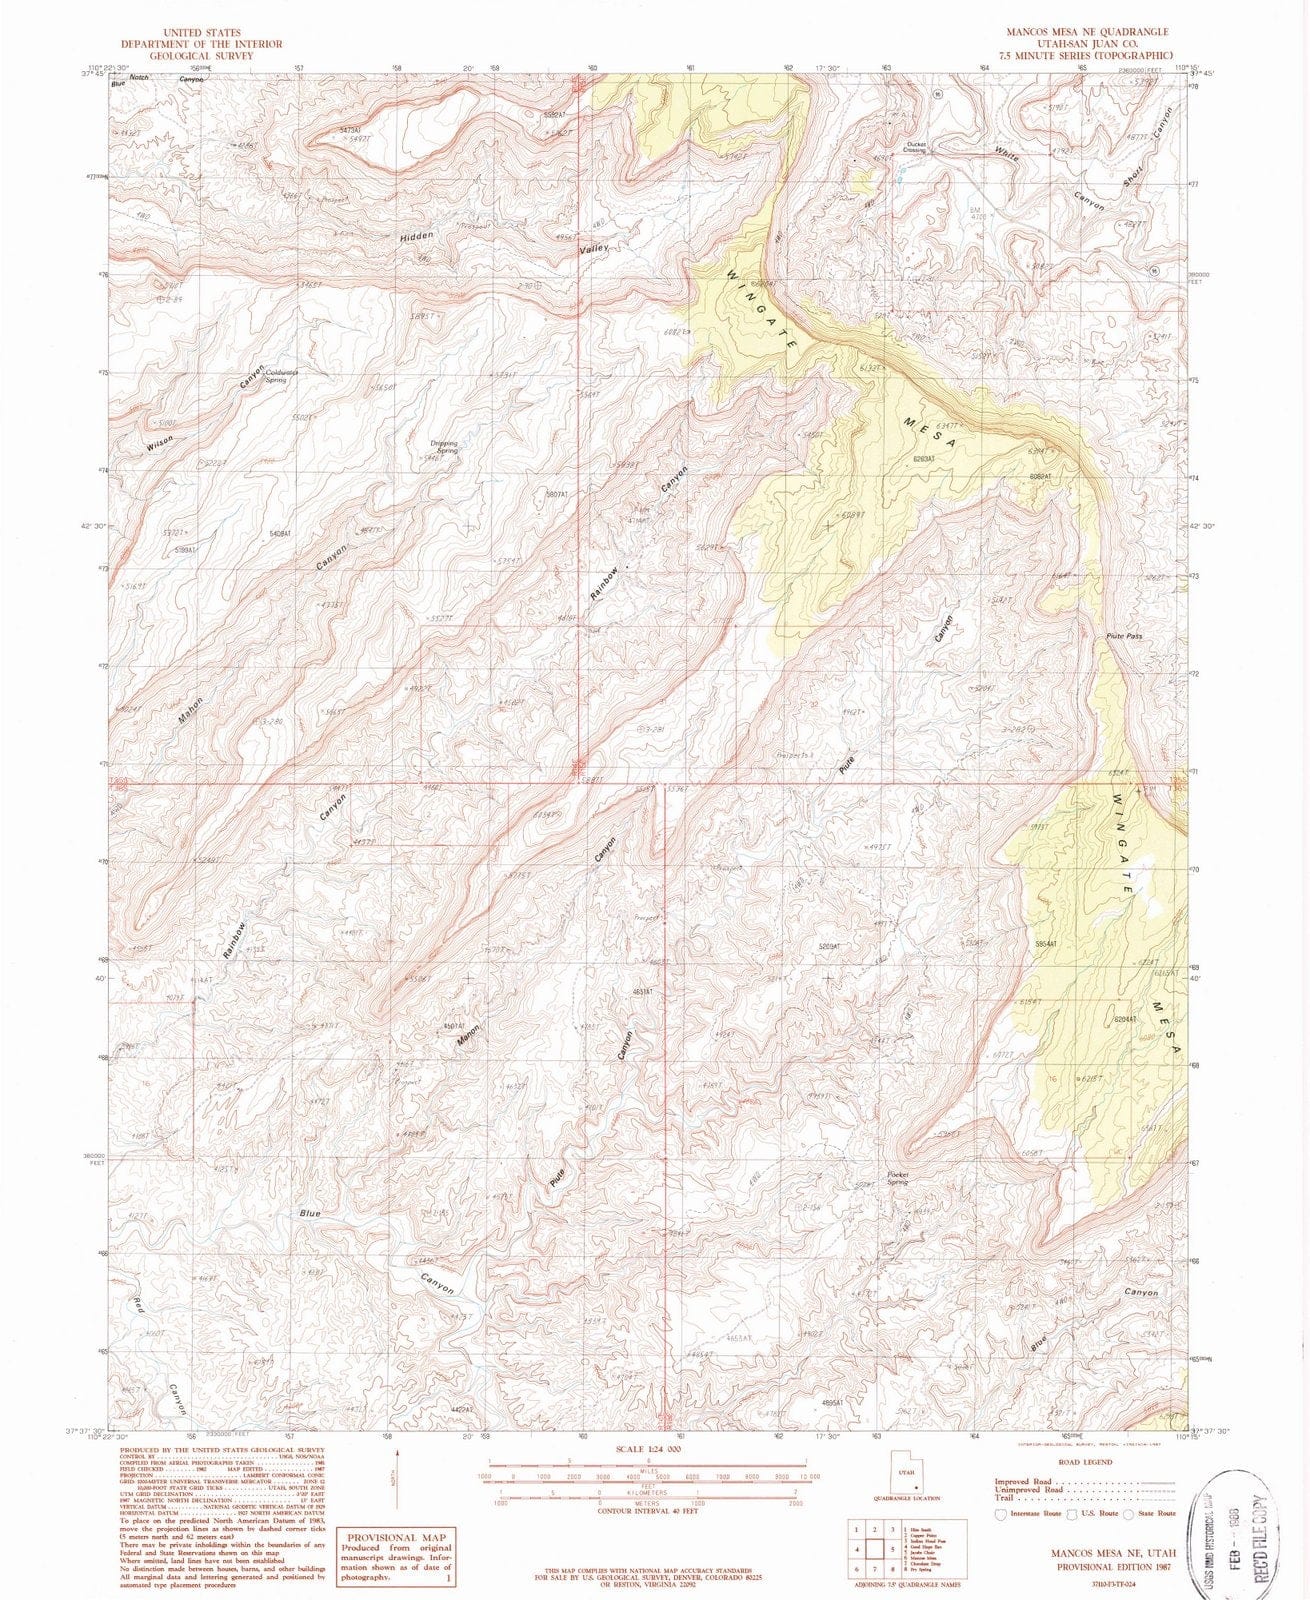 1987 Mancos Mesa, UT - Utah - USGS Topographic Map